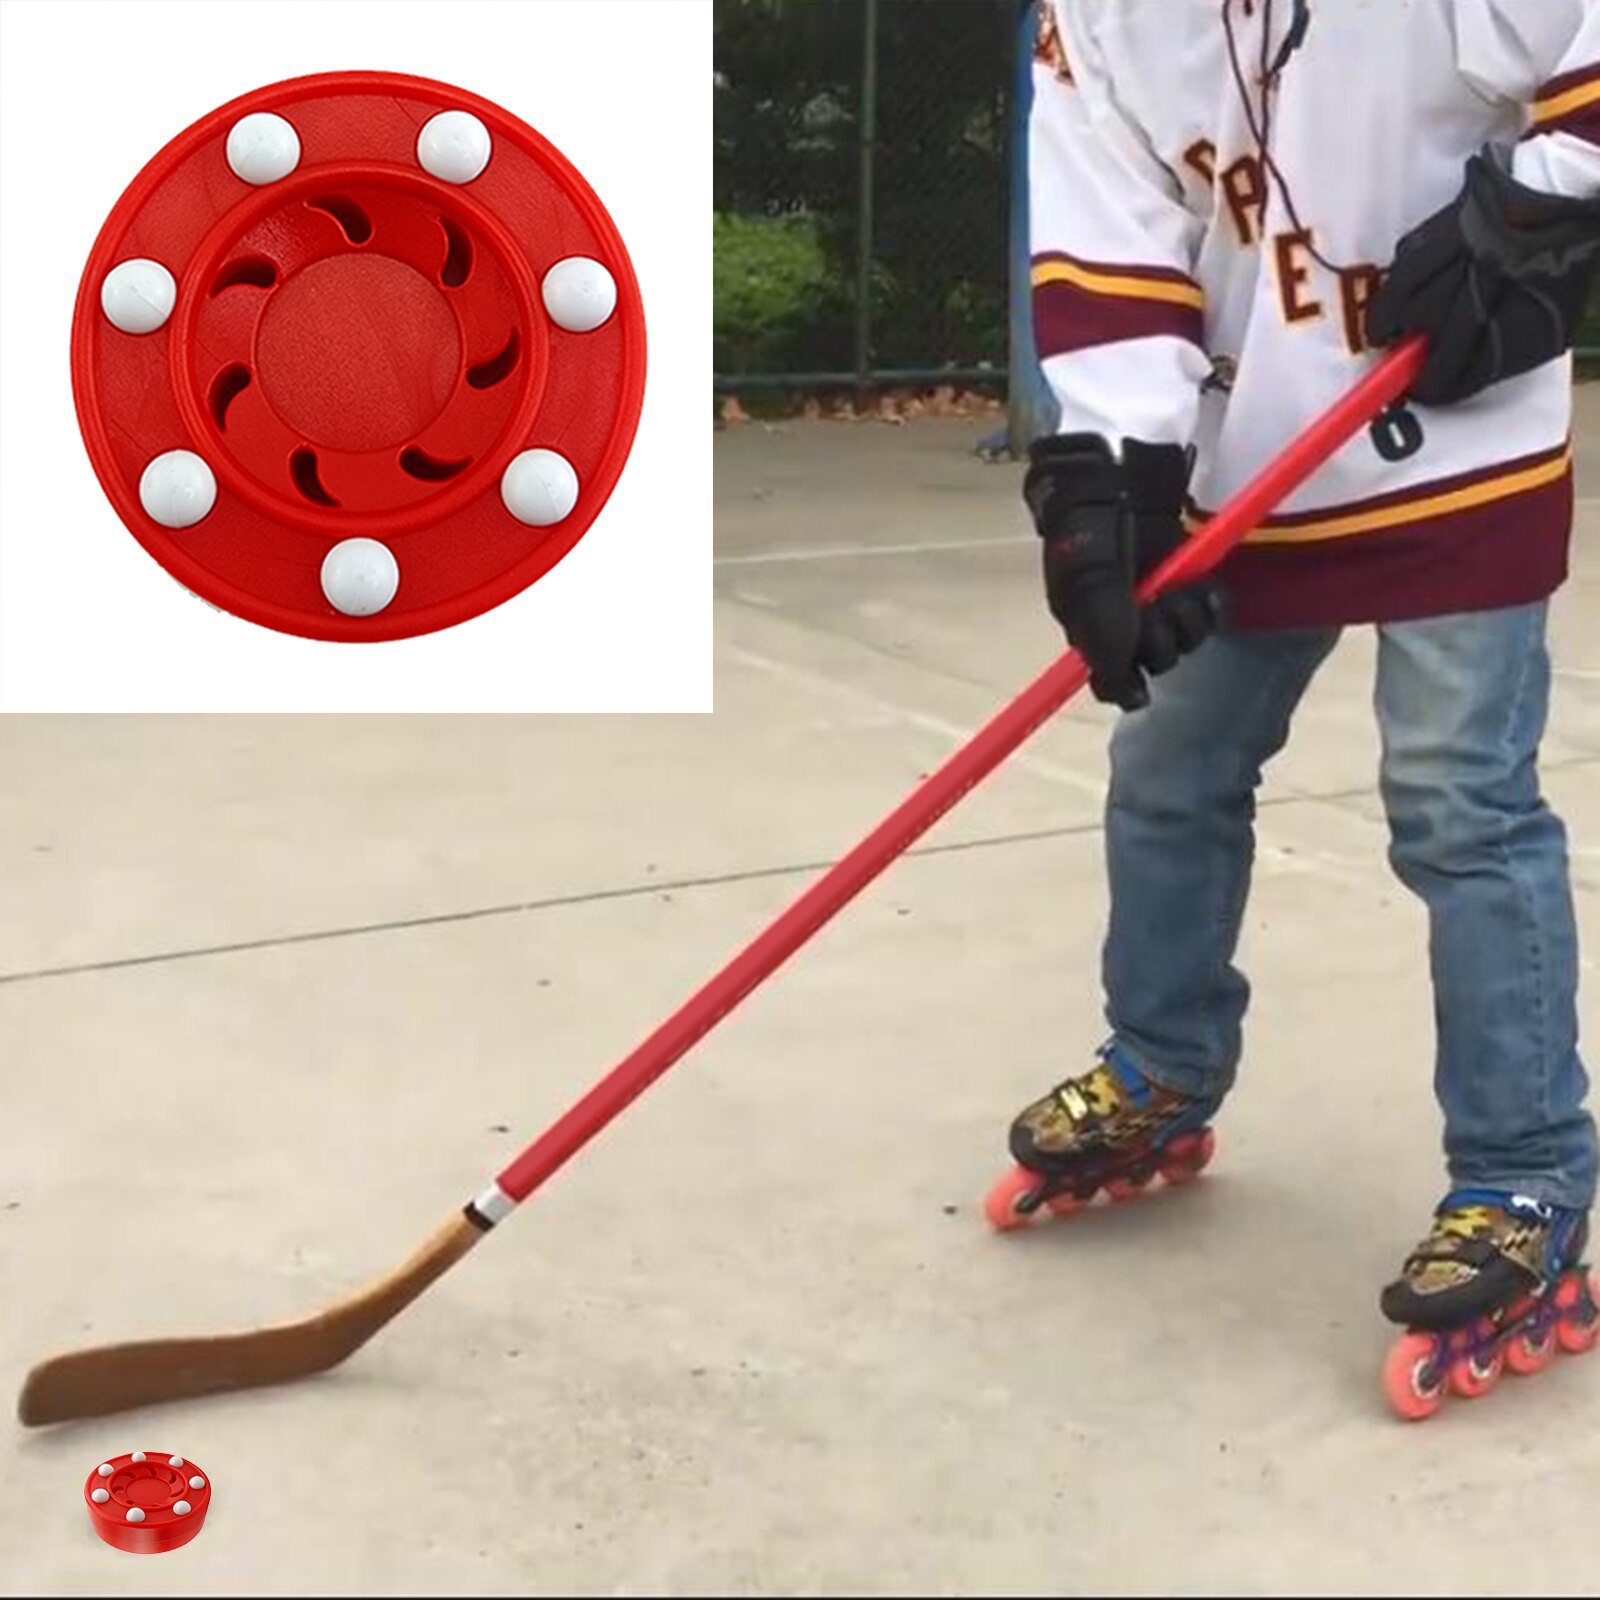 Premium Street Hockey Pucks Replacement, Roller Hockey Puck for better Shooting, Passing, Stick handling, Quad Hockey Puck Ball: Red